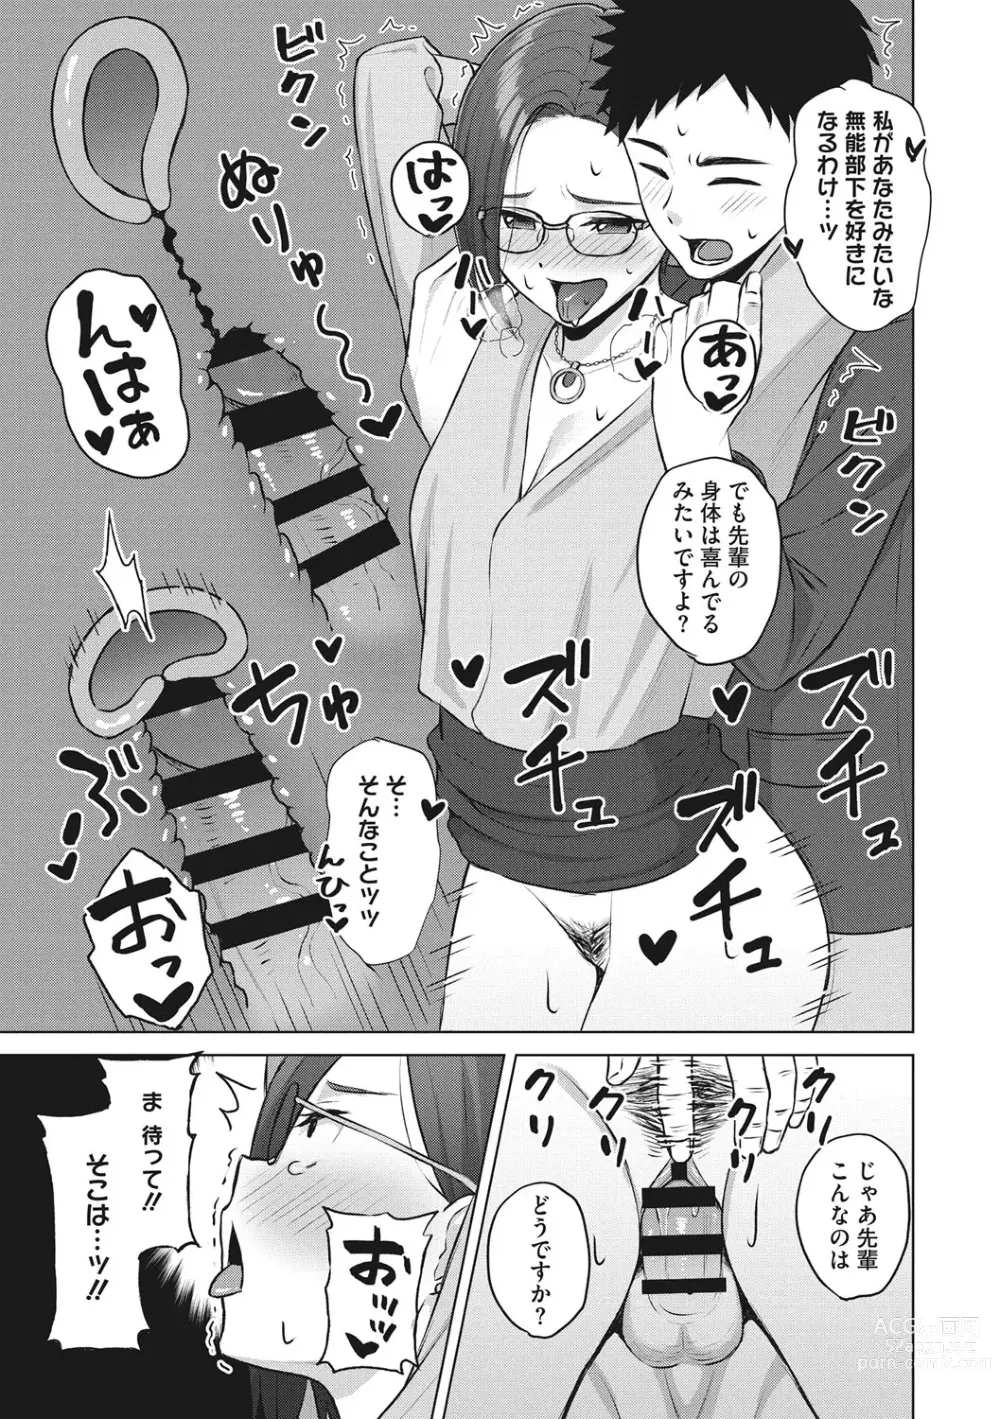 Page 190 of manga Hataraku Onna no Sei Jijou - Sexual Conditions for Working Women